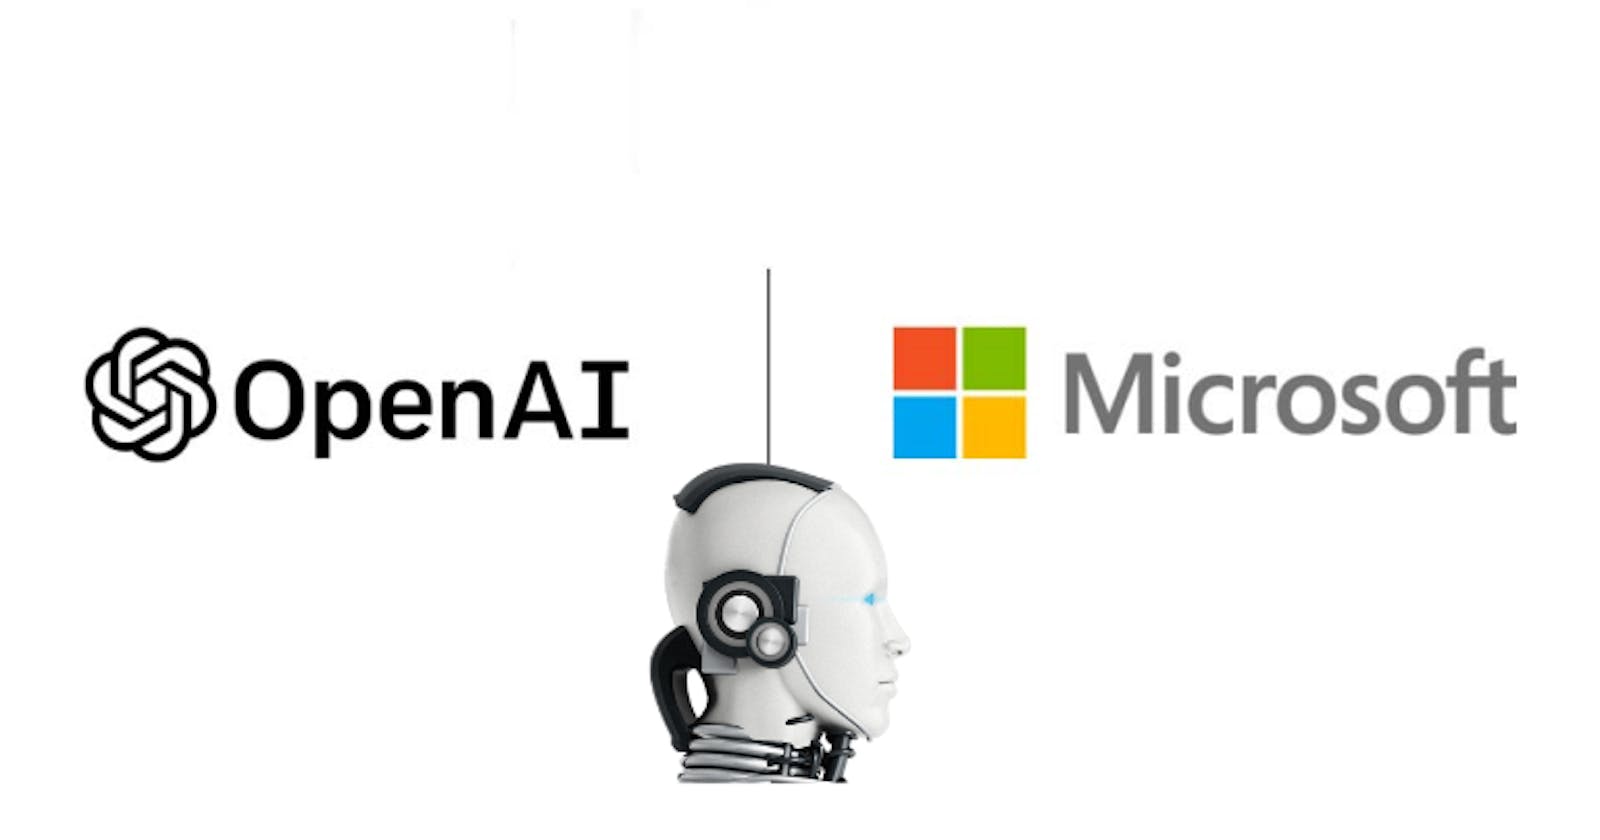 Microsoft + Open AI building next gamechanger chatbot ….